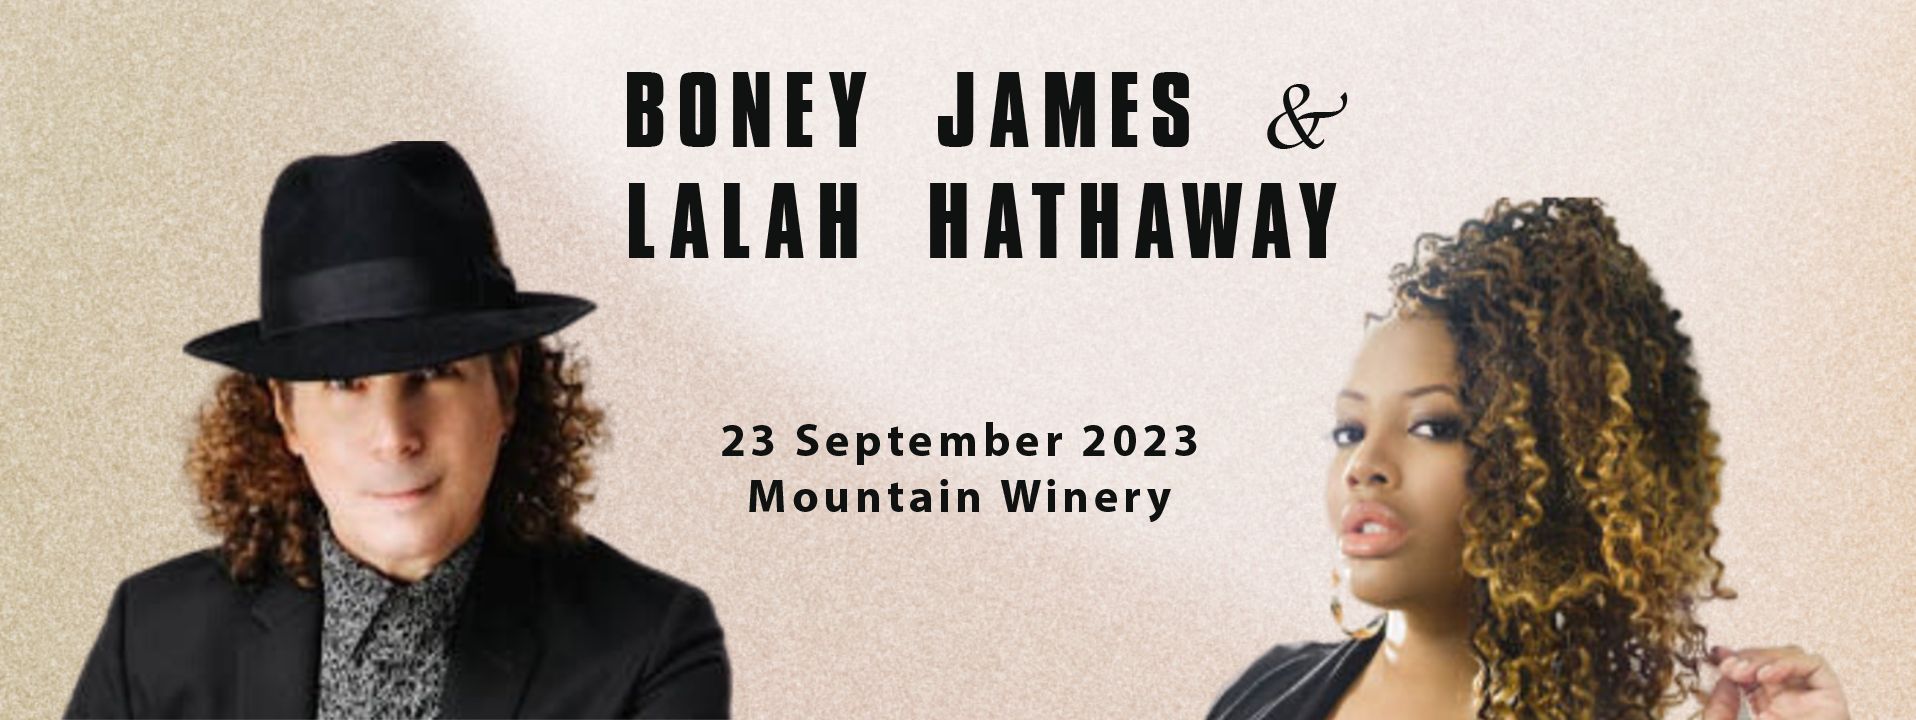 Boney James & Lalah Hathaway